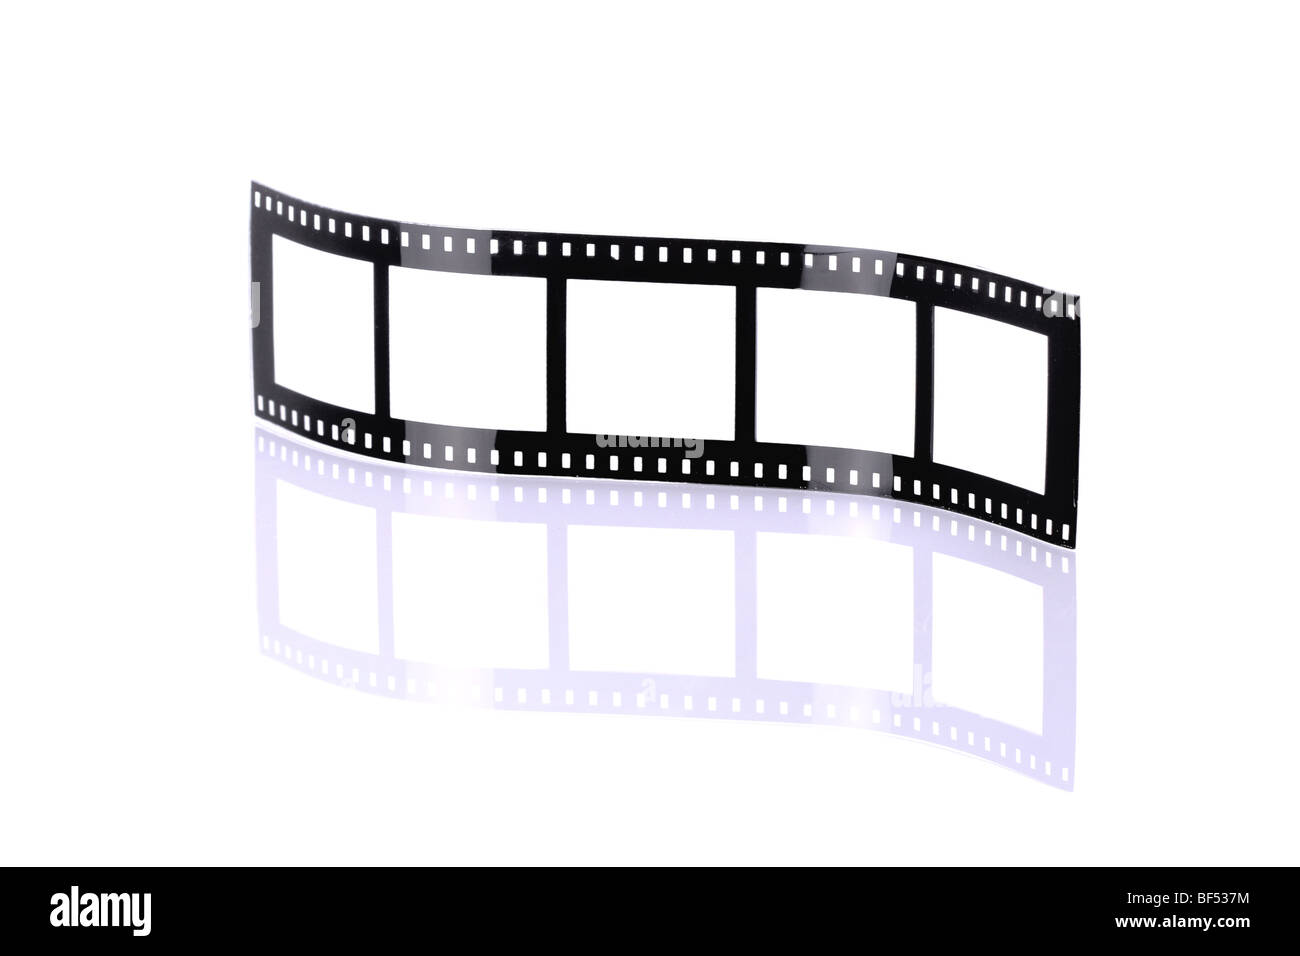 old fashioned film-like photo frames, isolated on white Stock Photo